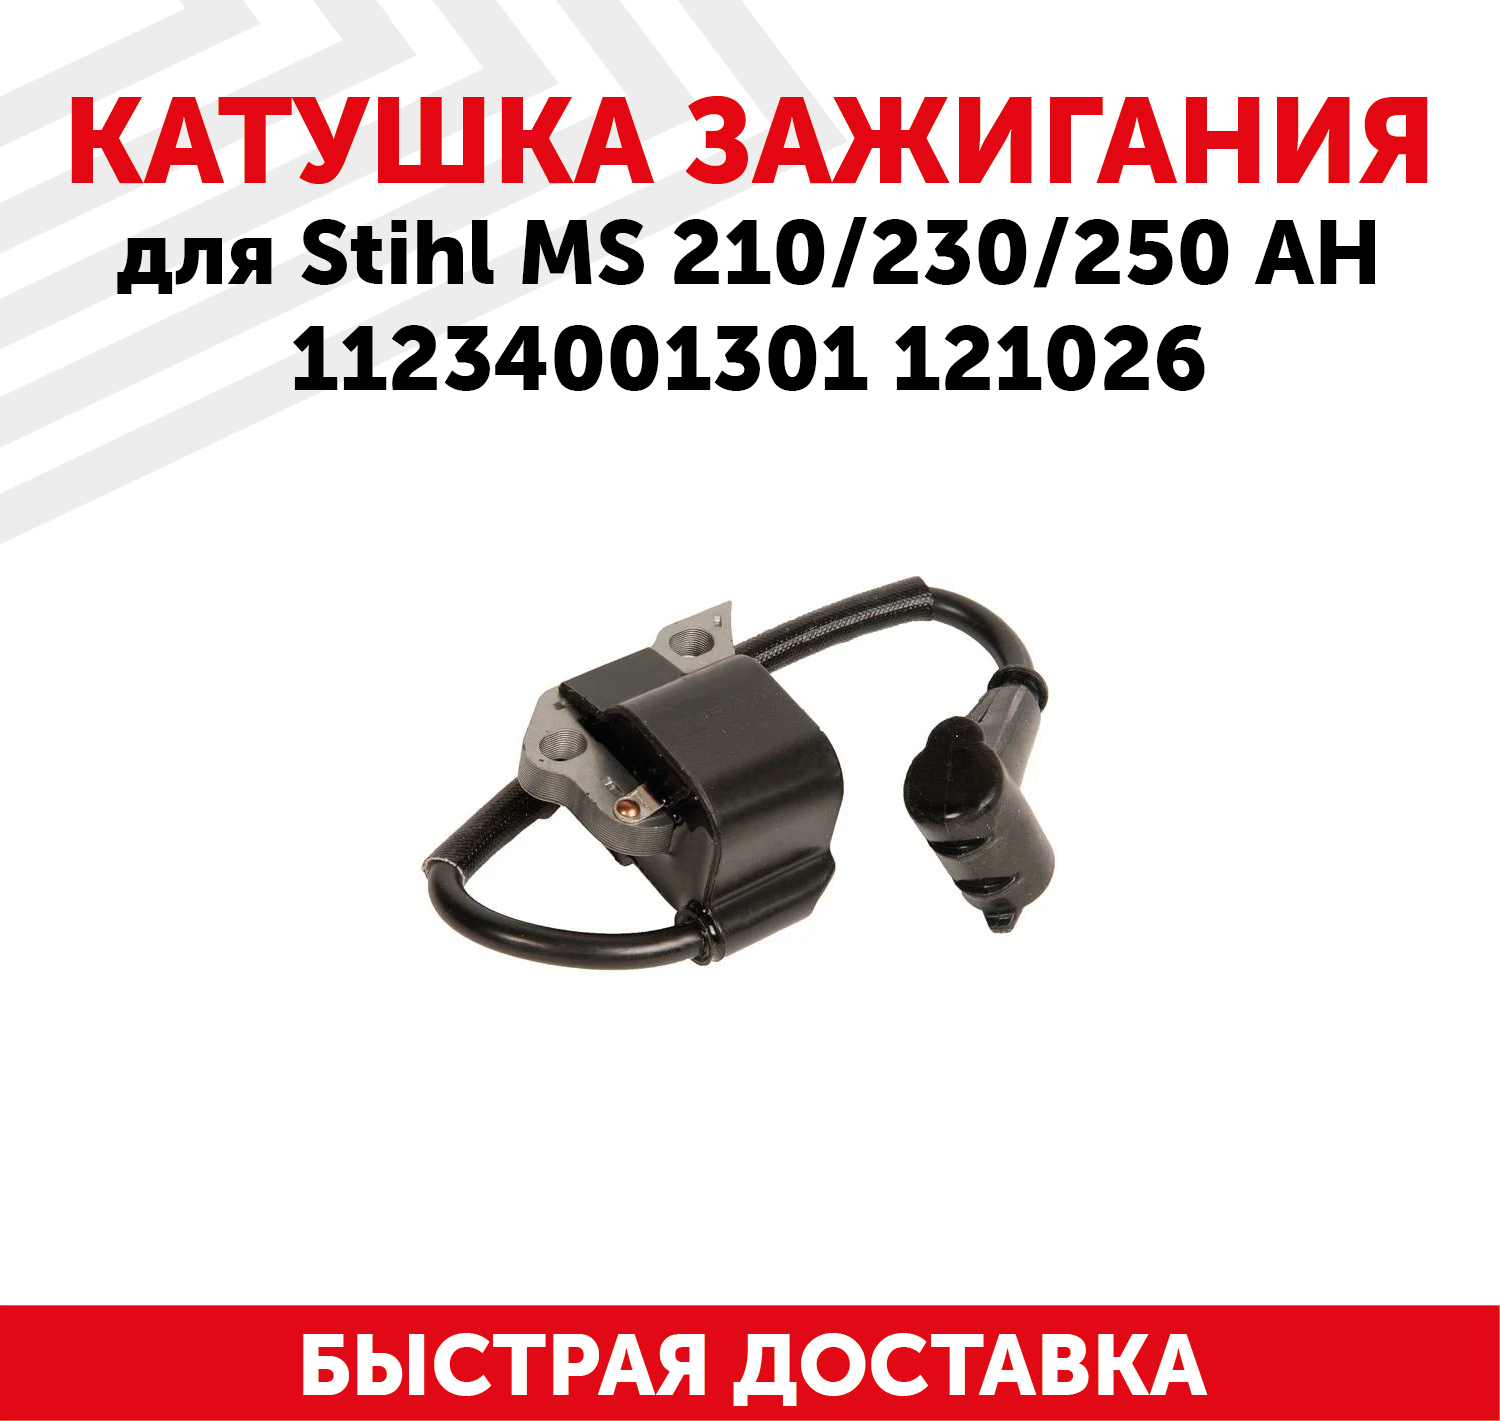 Катушка зажигания (магнето) для бензопилы STIHL MS 210/230/250 АН11234001301 121026